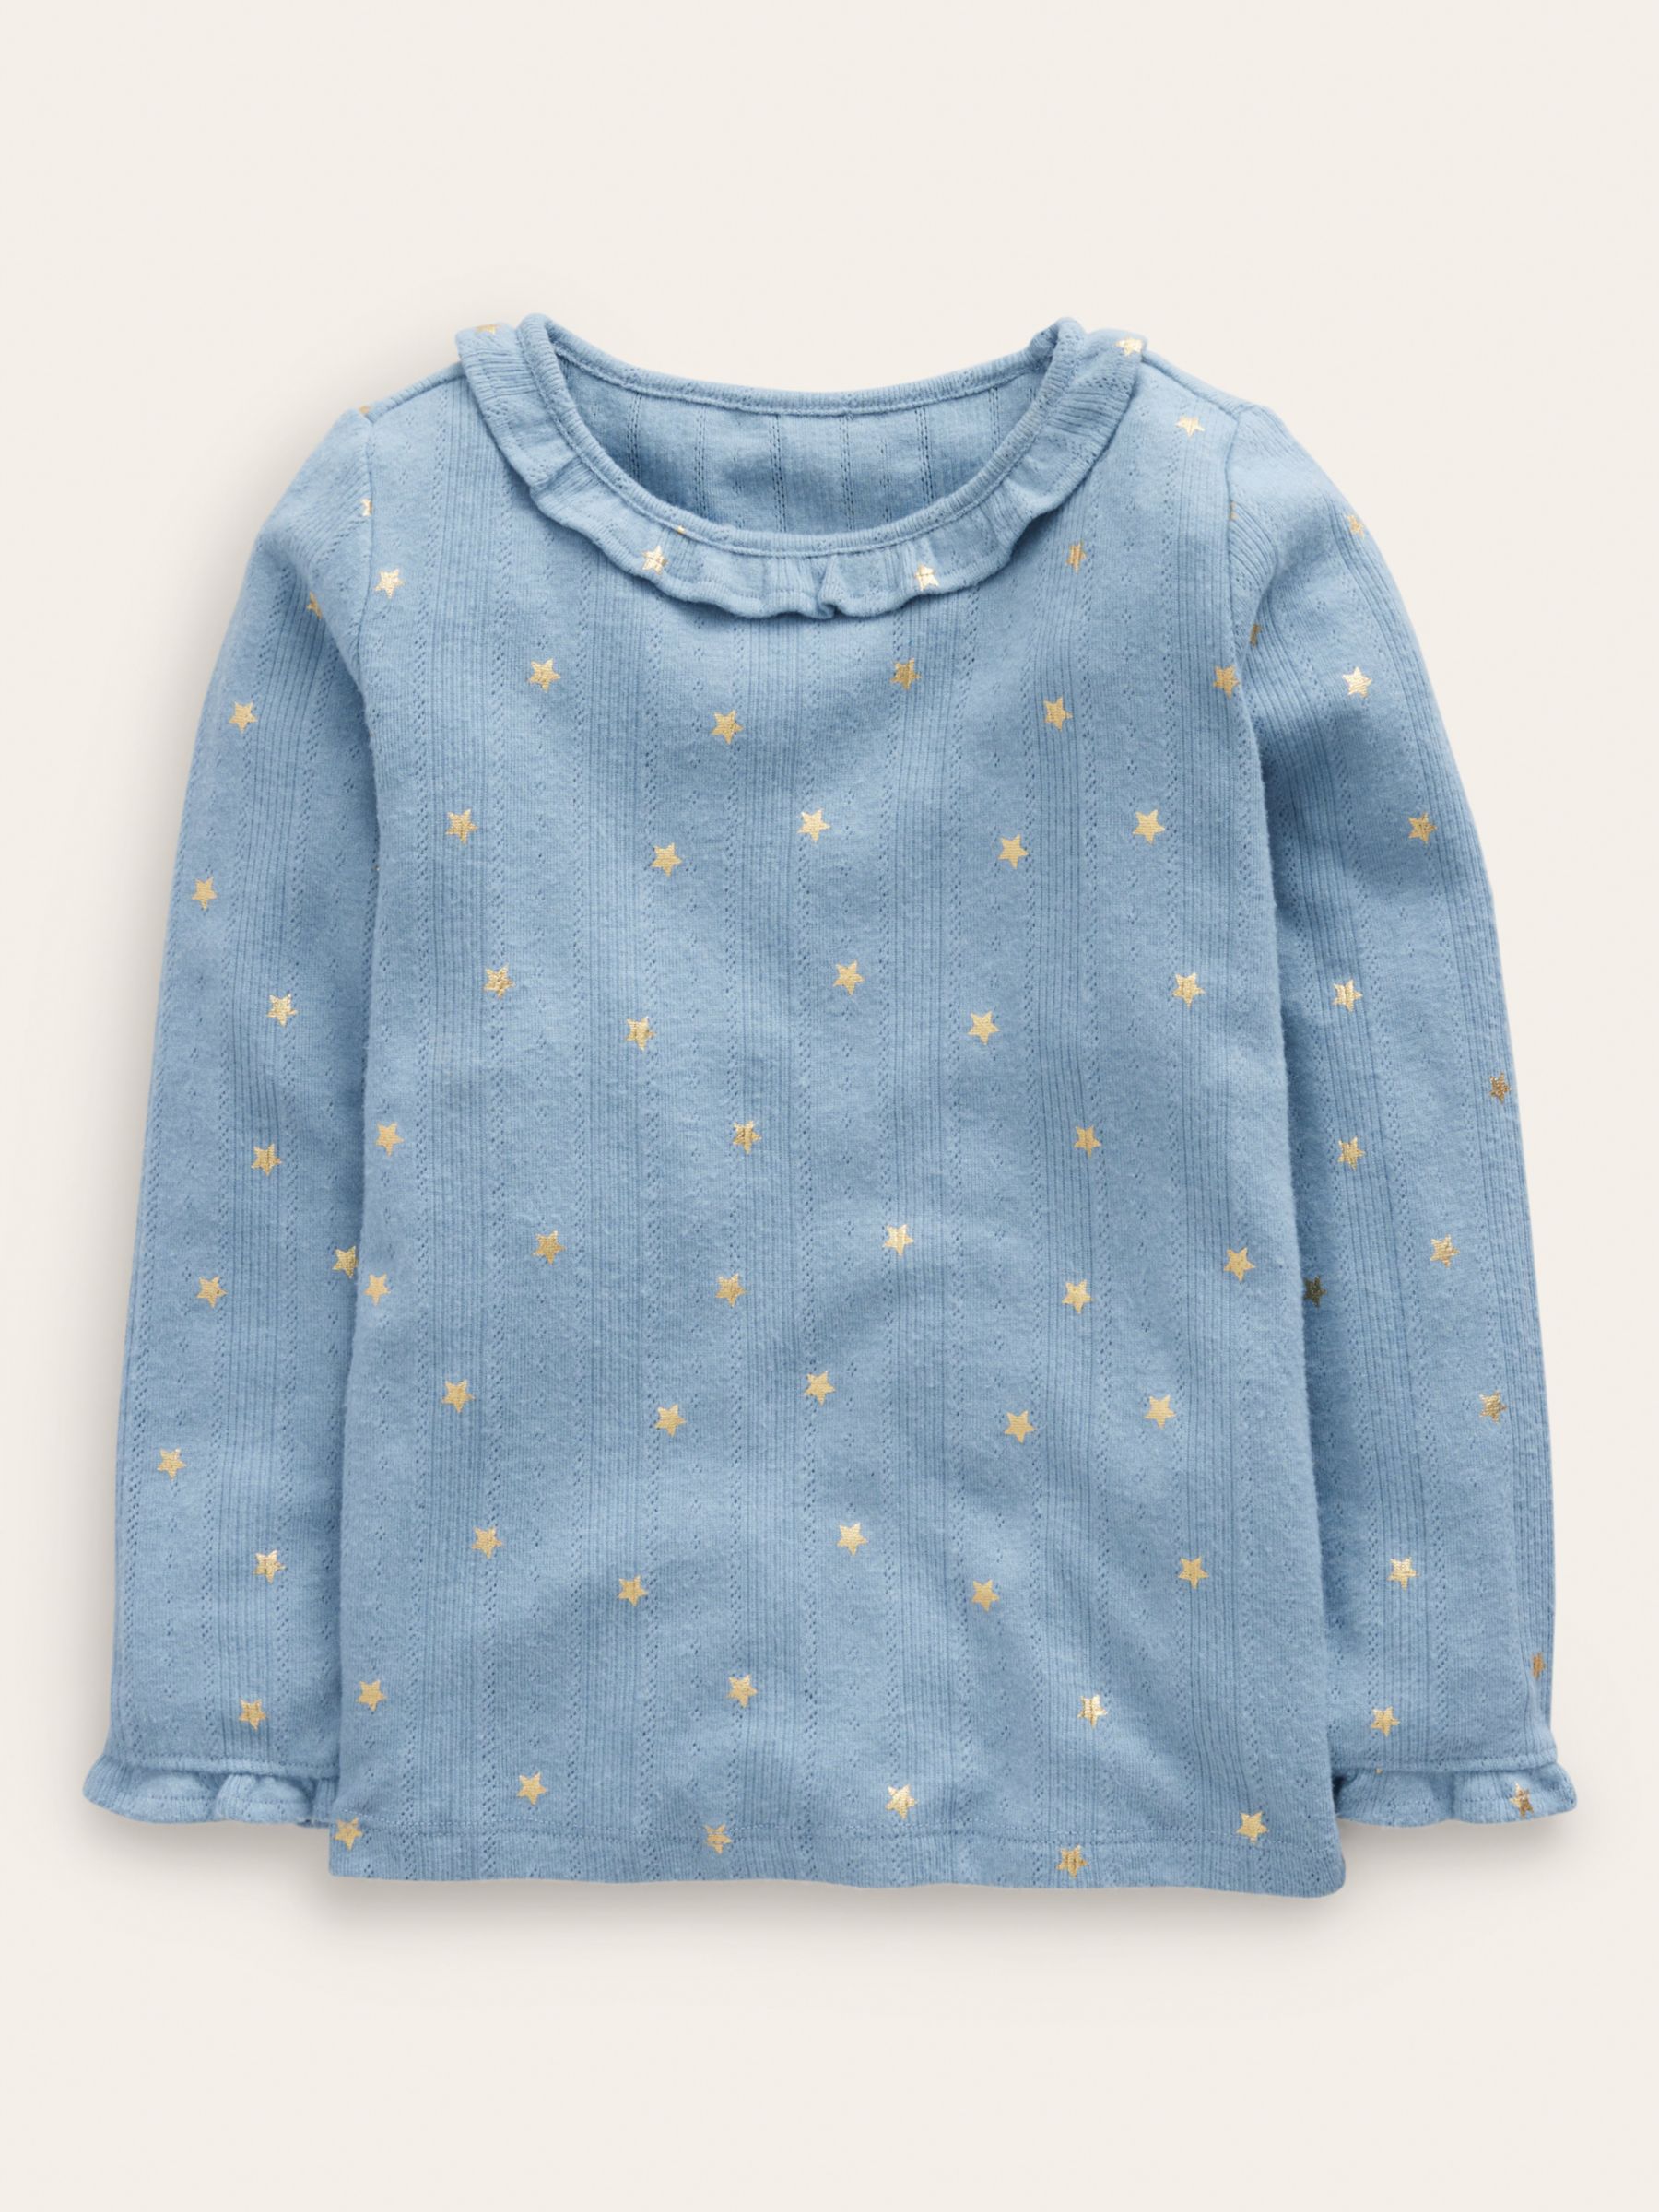 Mini Boden Kids' Ruffle Pointelle Top, Blue Gold Star, 12-18 months